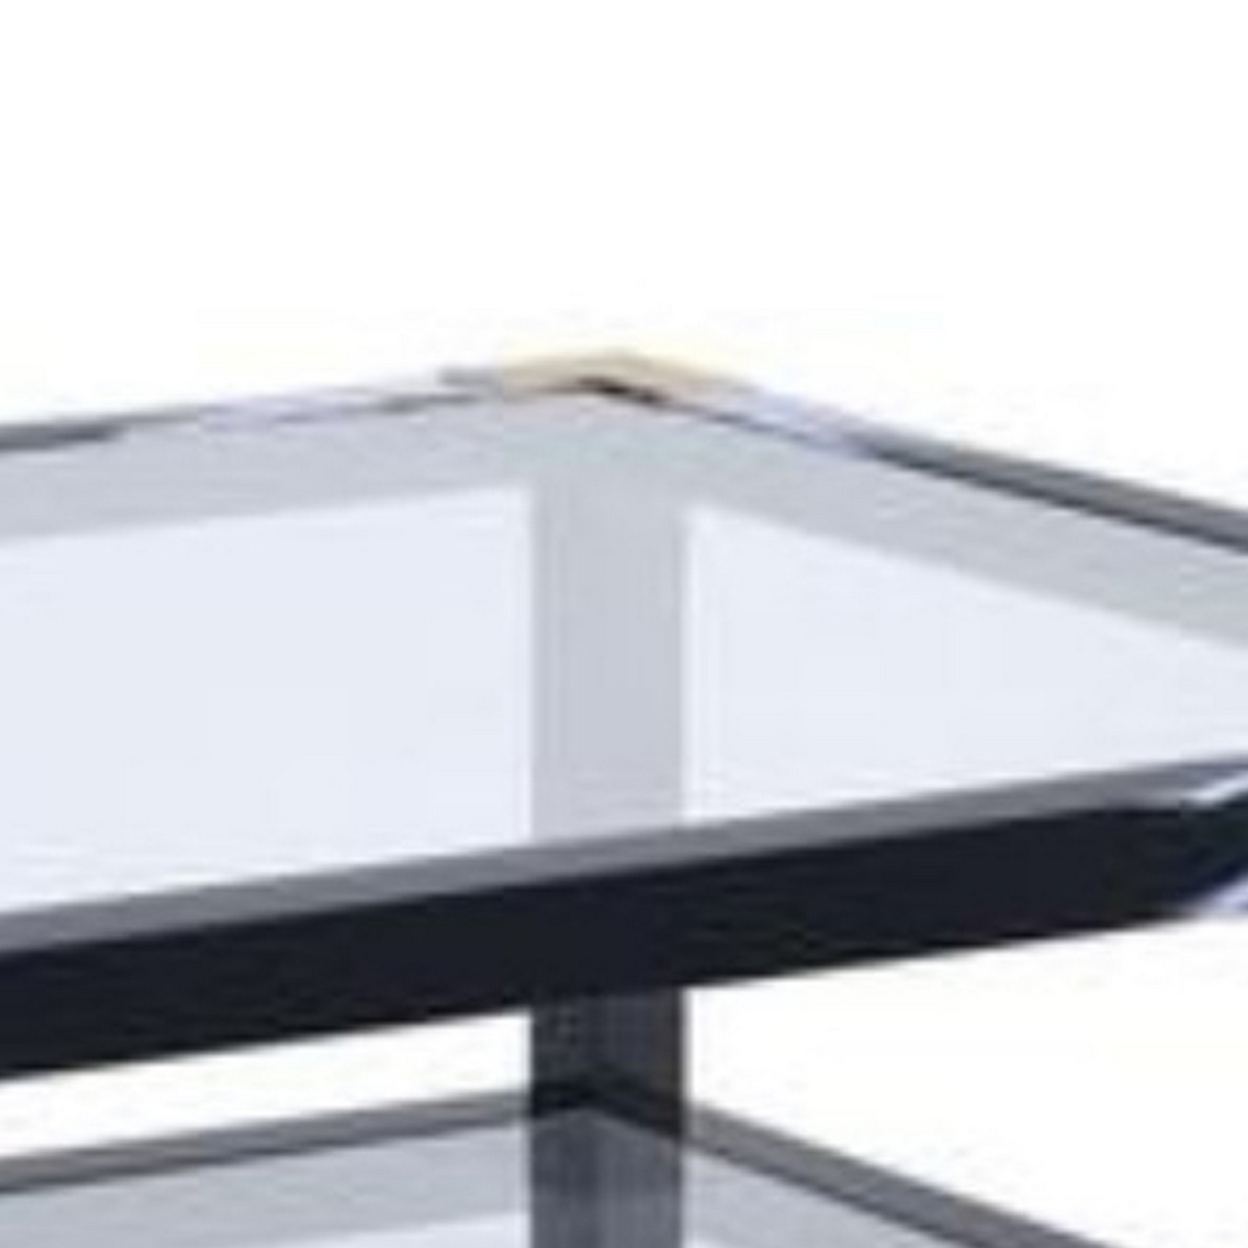 Rectangular Metal Coffee Table With Glass Top And Shelf, Black- Saltoro Sherpi